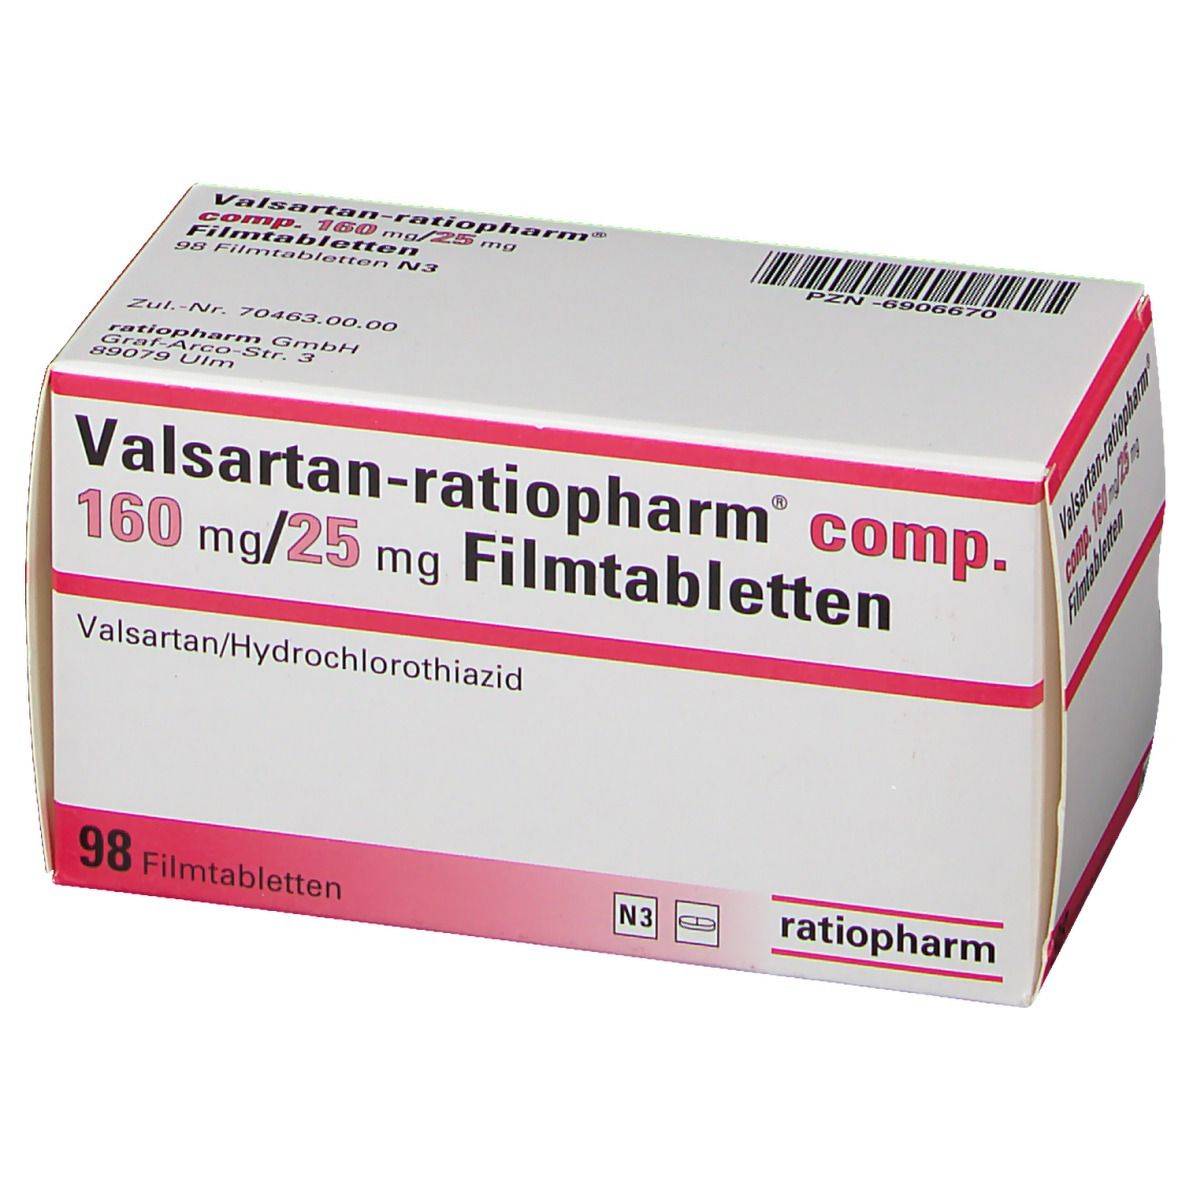 Valsartan-ratiopharm® comp. 160 mg/25 mg